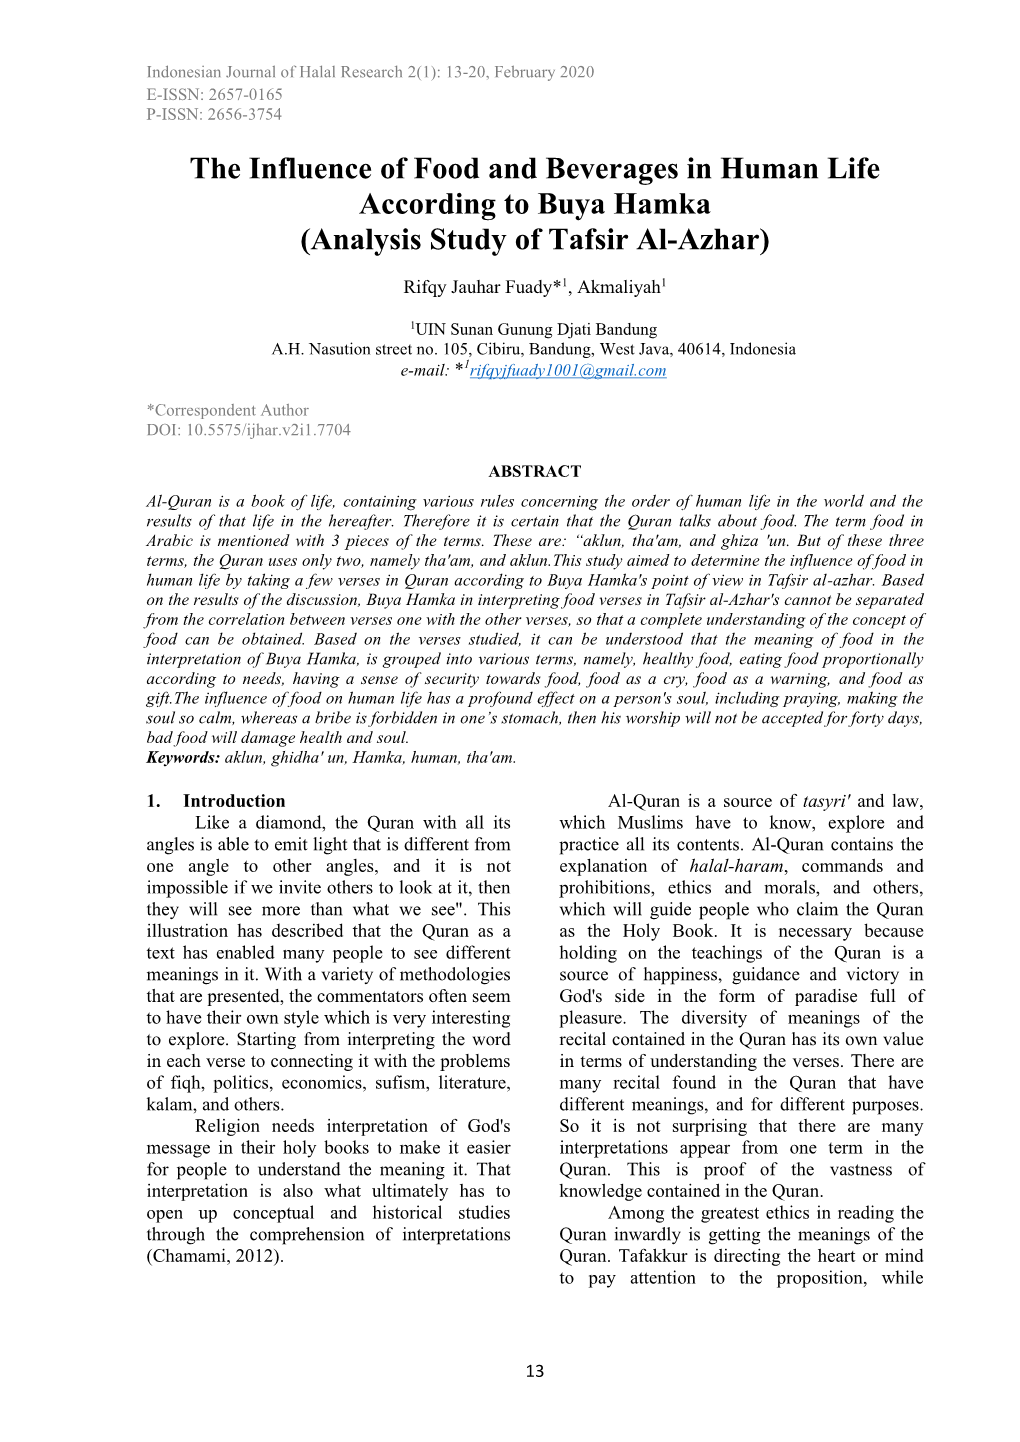 Analysis Study of Tafsir Al-Azhar)